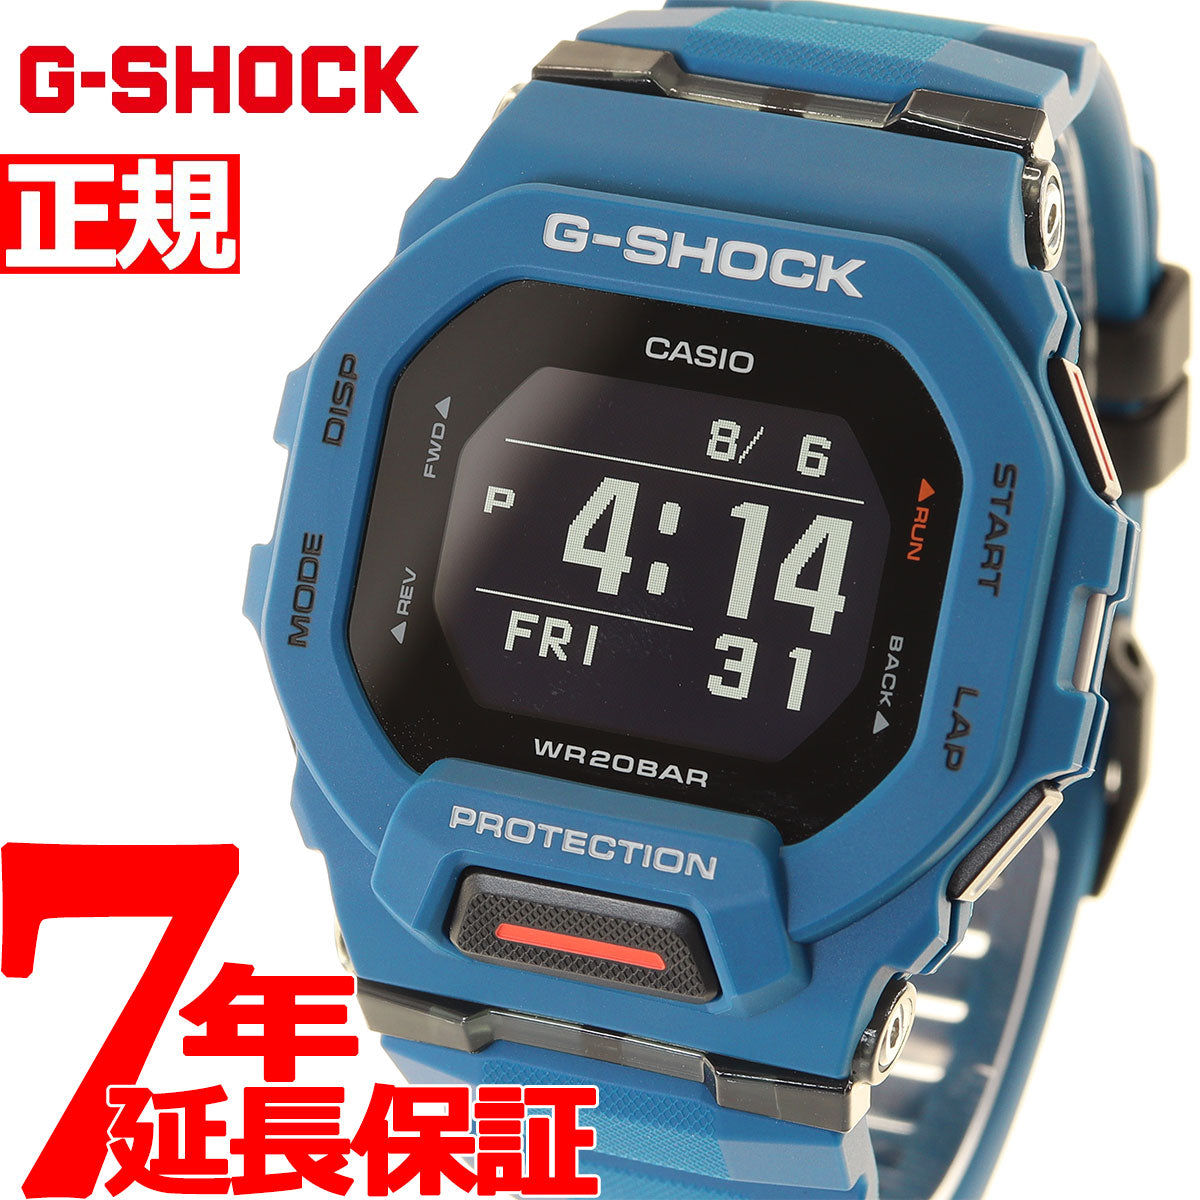 G-SHOCK Gショック G-SQUAD ジースクワッド GBD-200シリーズ GBD-200-2JF メンズ 腕時計 Bluetooth デジタル ブルー 青 CASIO カシオ